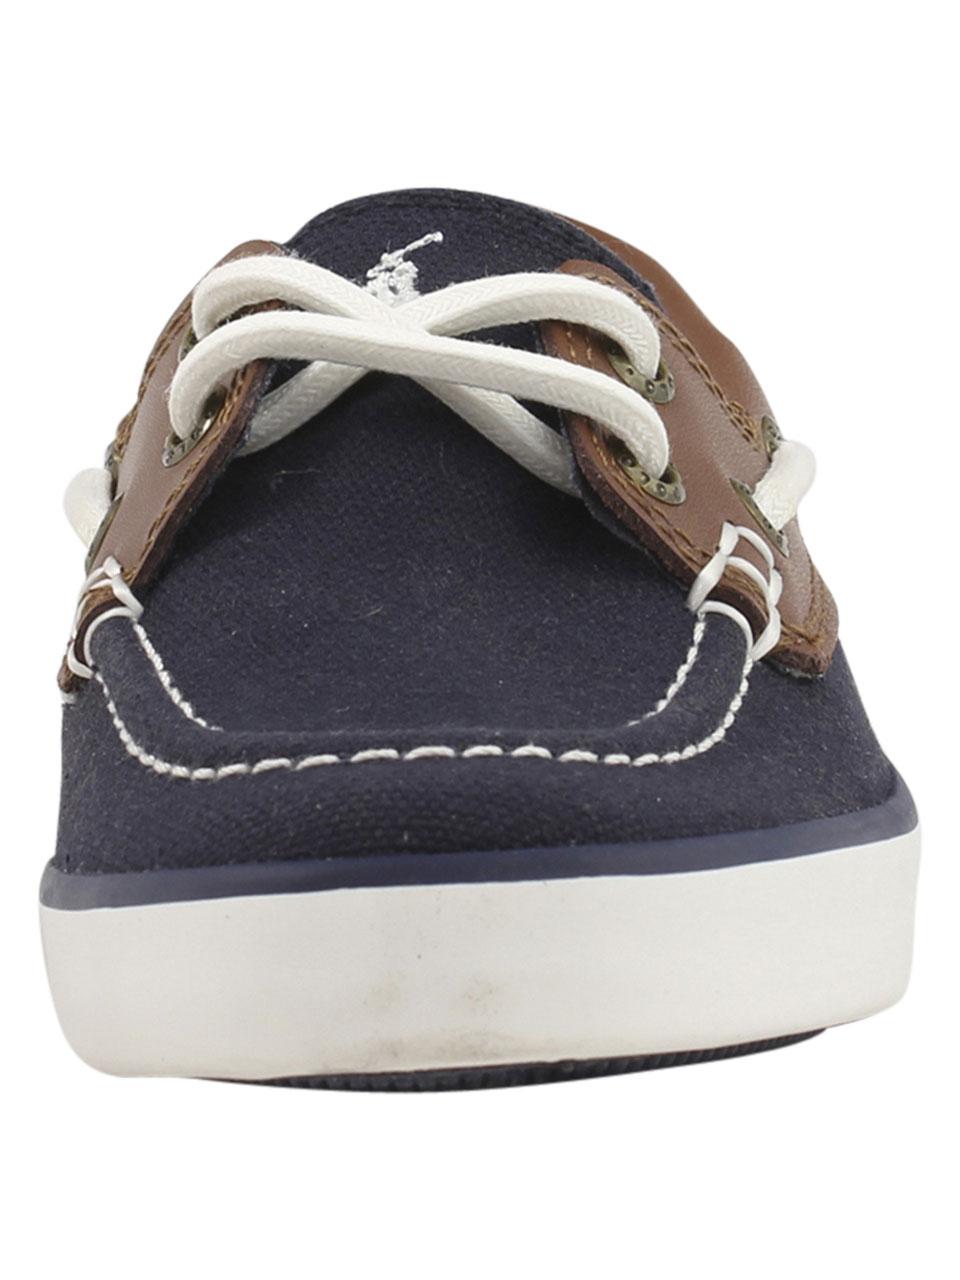 Polo Ralph Lauren Little/Big Boy's Sander-CL Loafers Boat Shoes ...